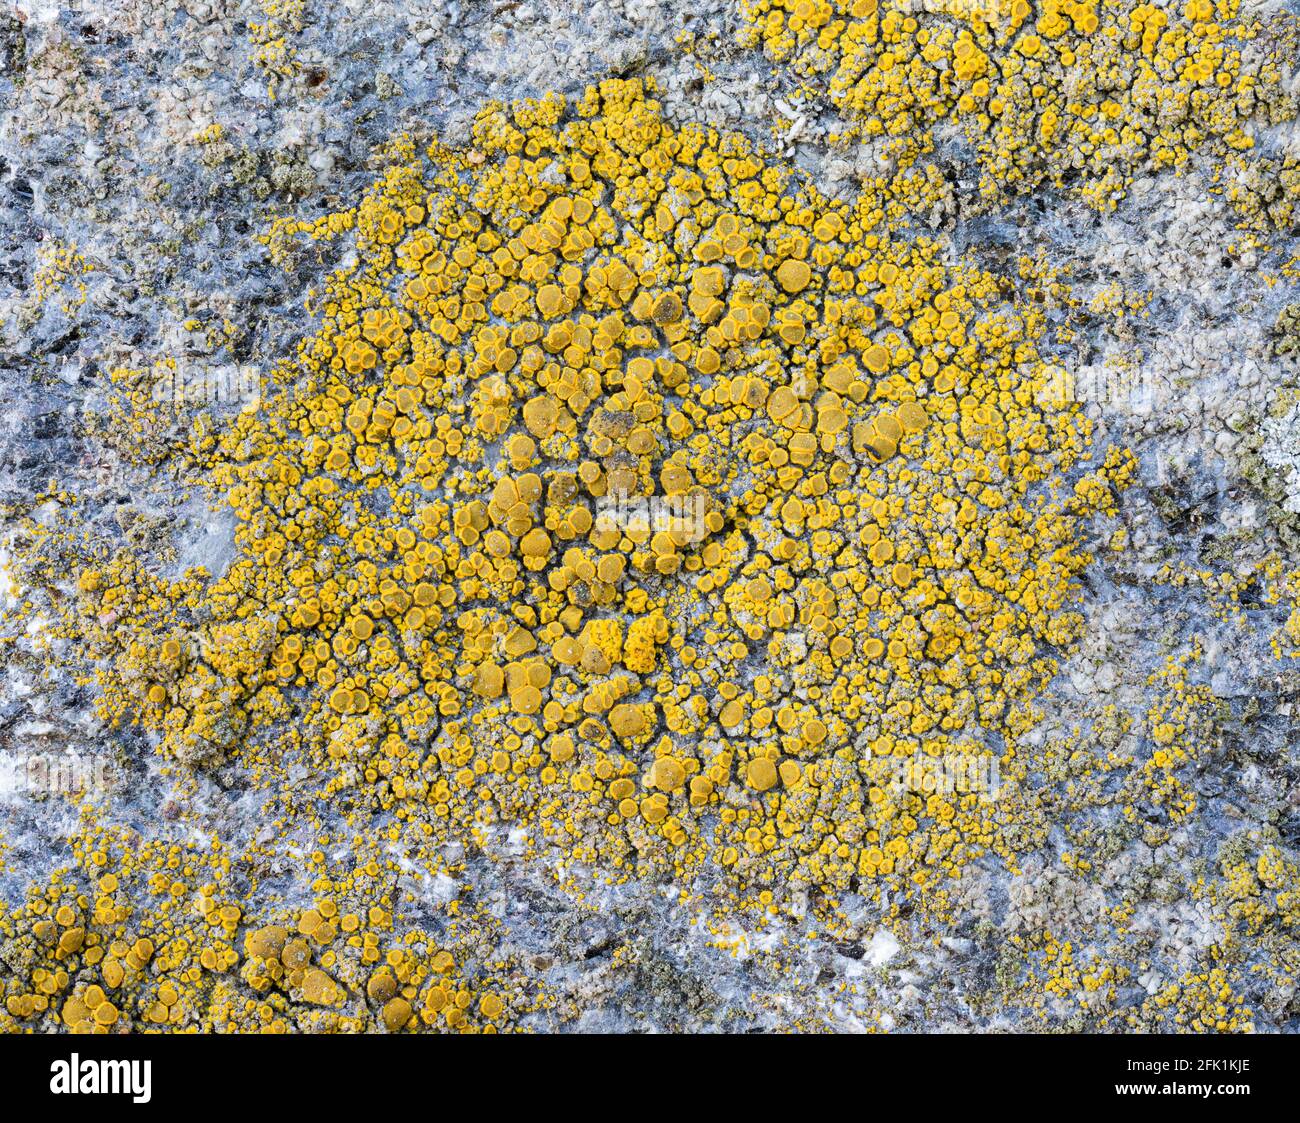 Common Goldspeck Lichen, Candelariella vitellina Stock Photo